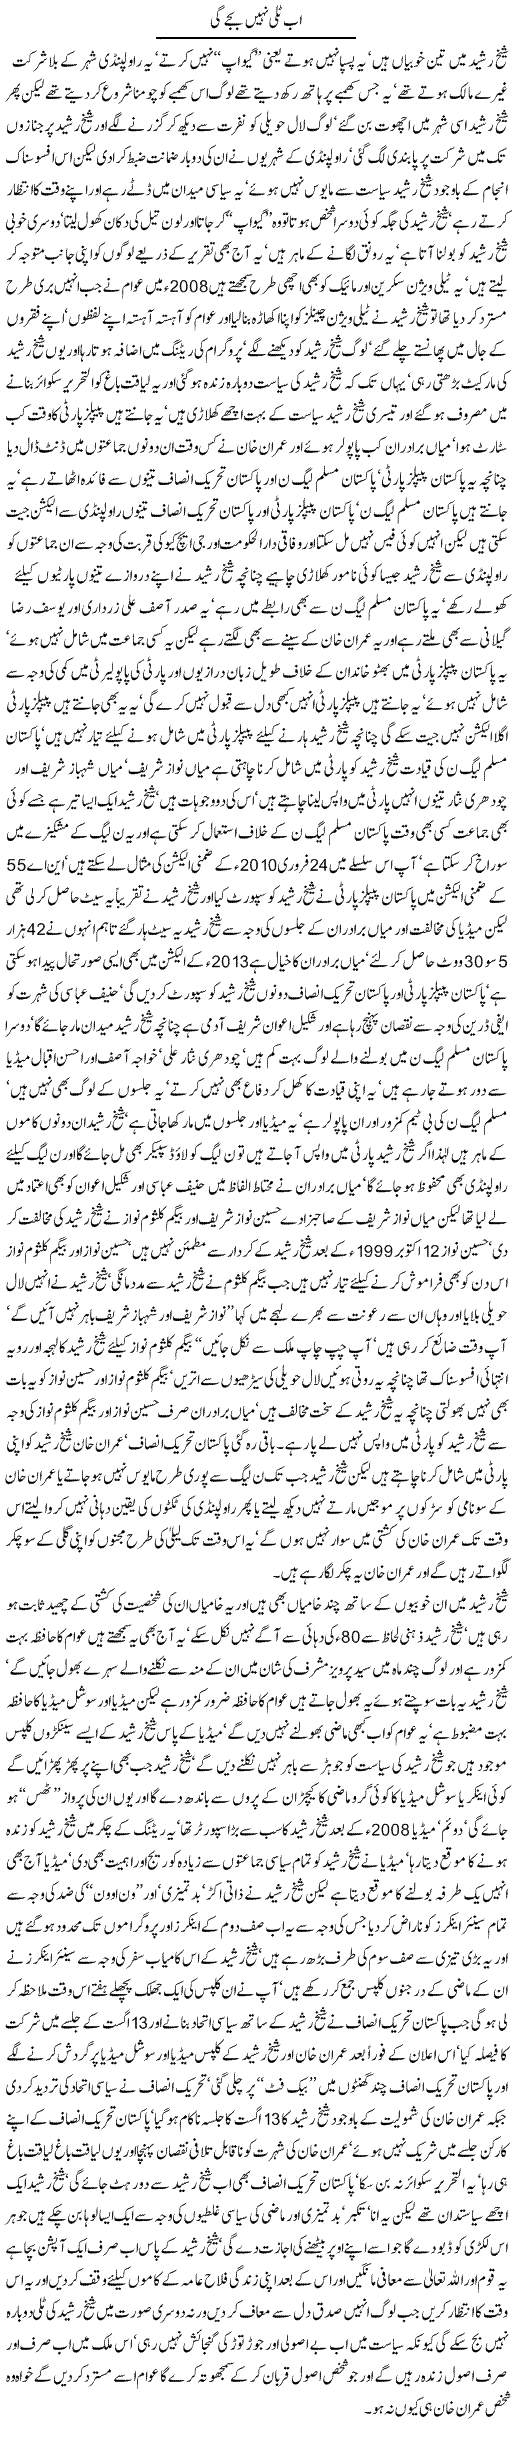 Sheikh Rasheed Express Column Javed Chaudhry 16 August 2012